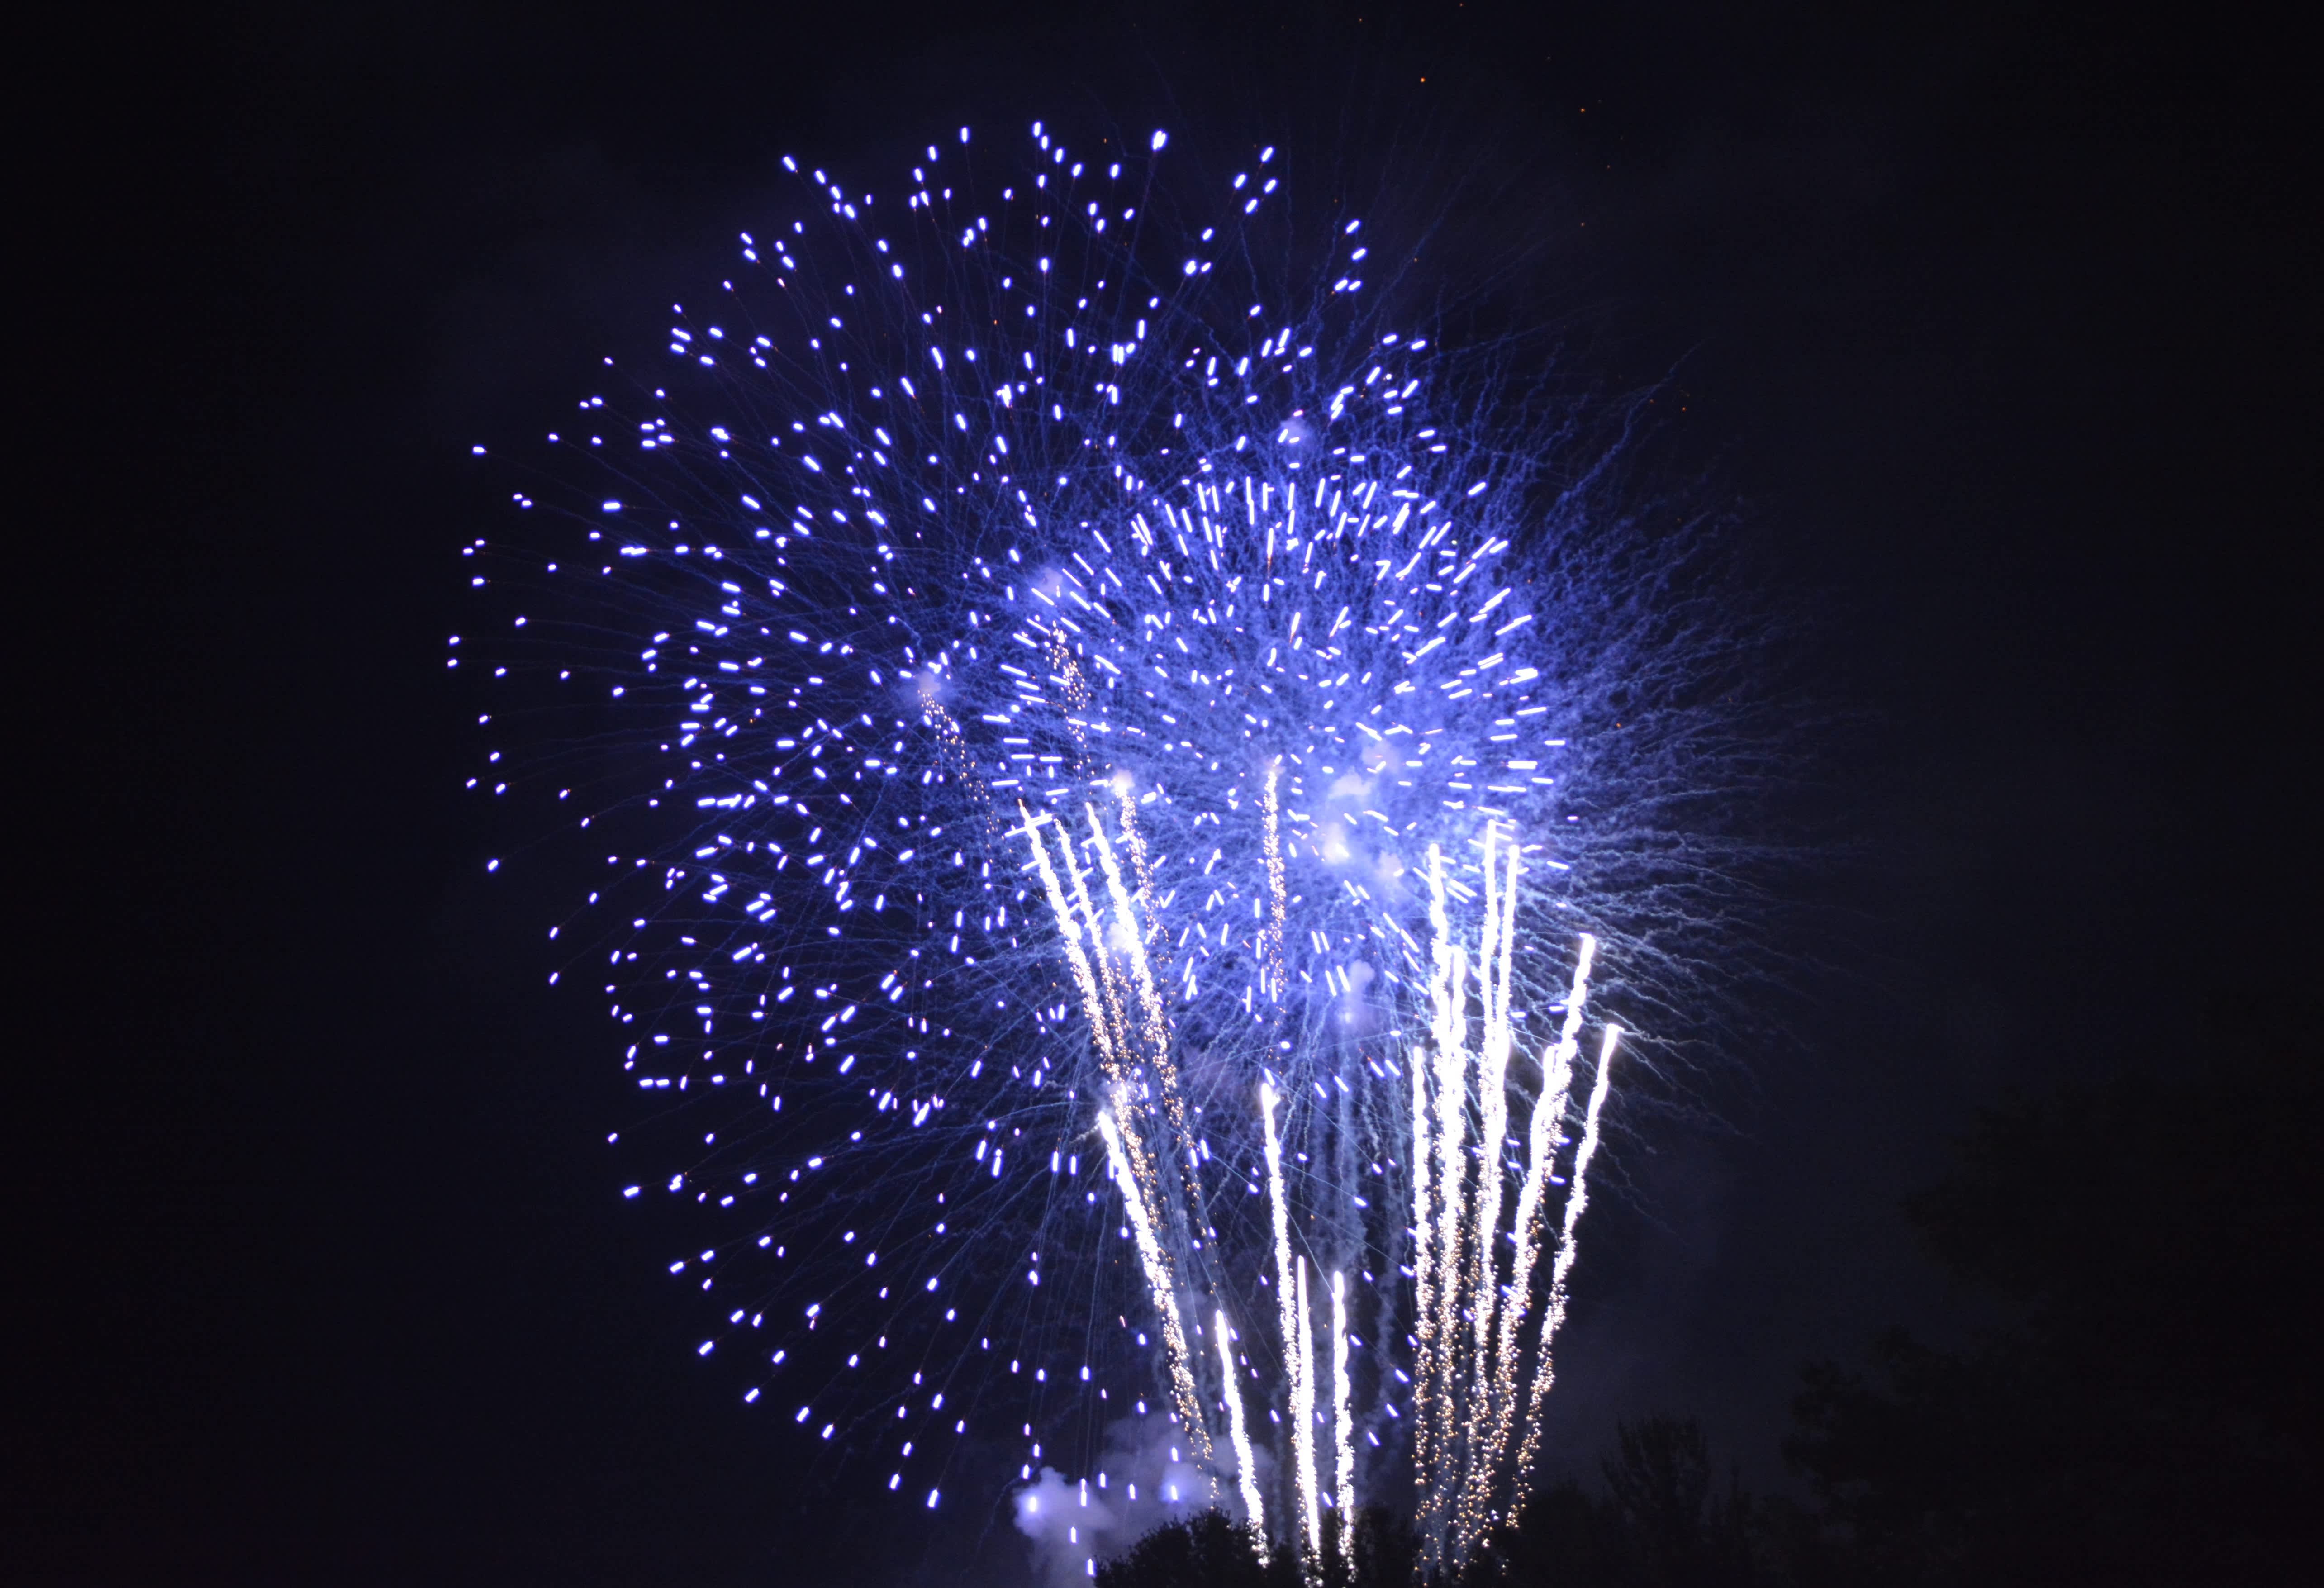 Fireworks Celebration Honesdale Pa 18431